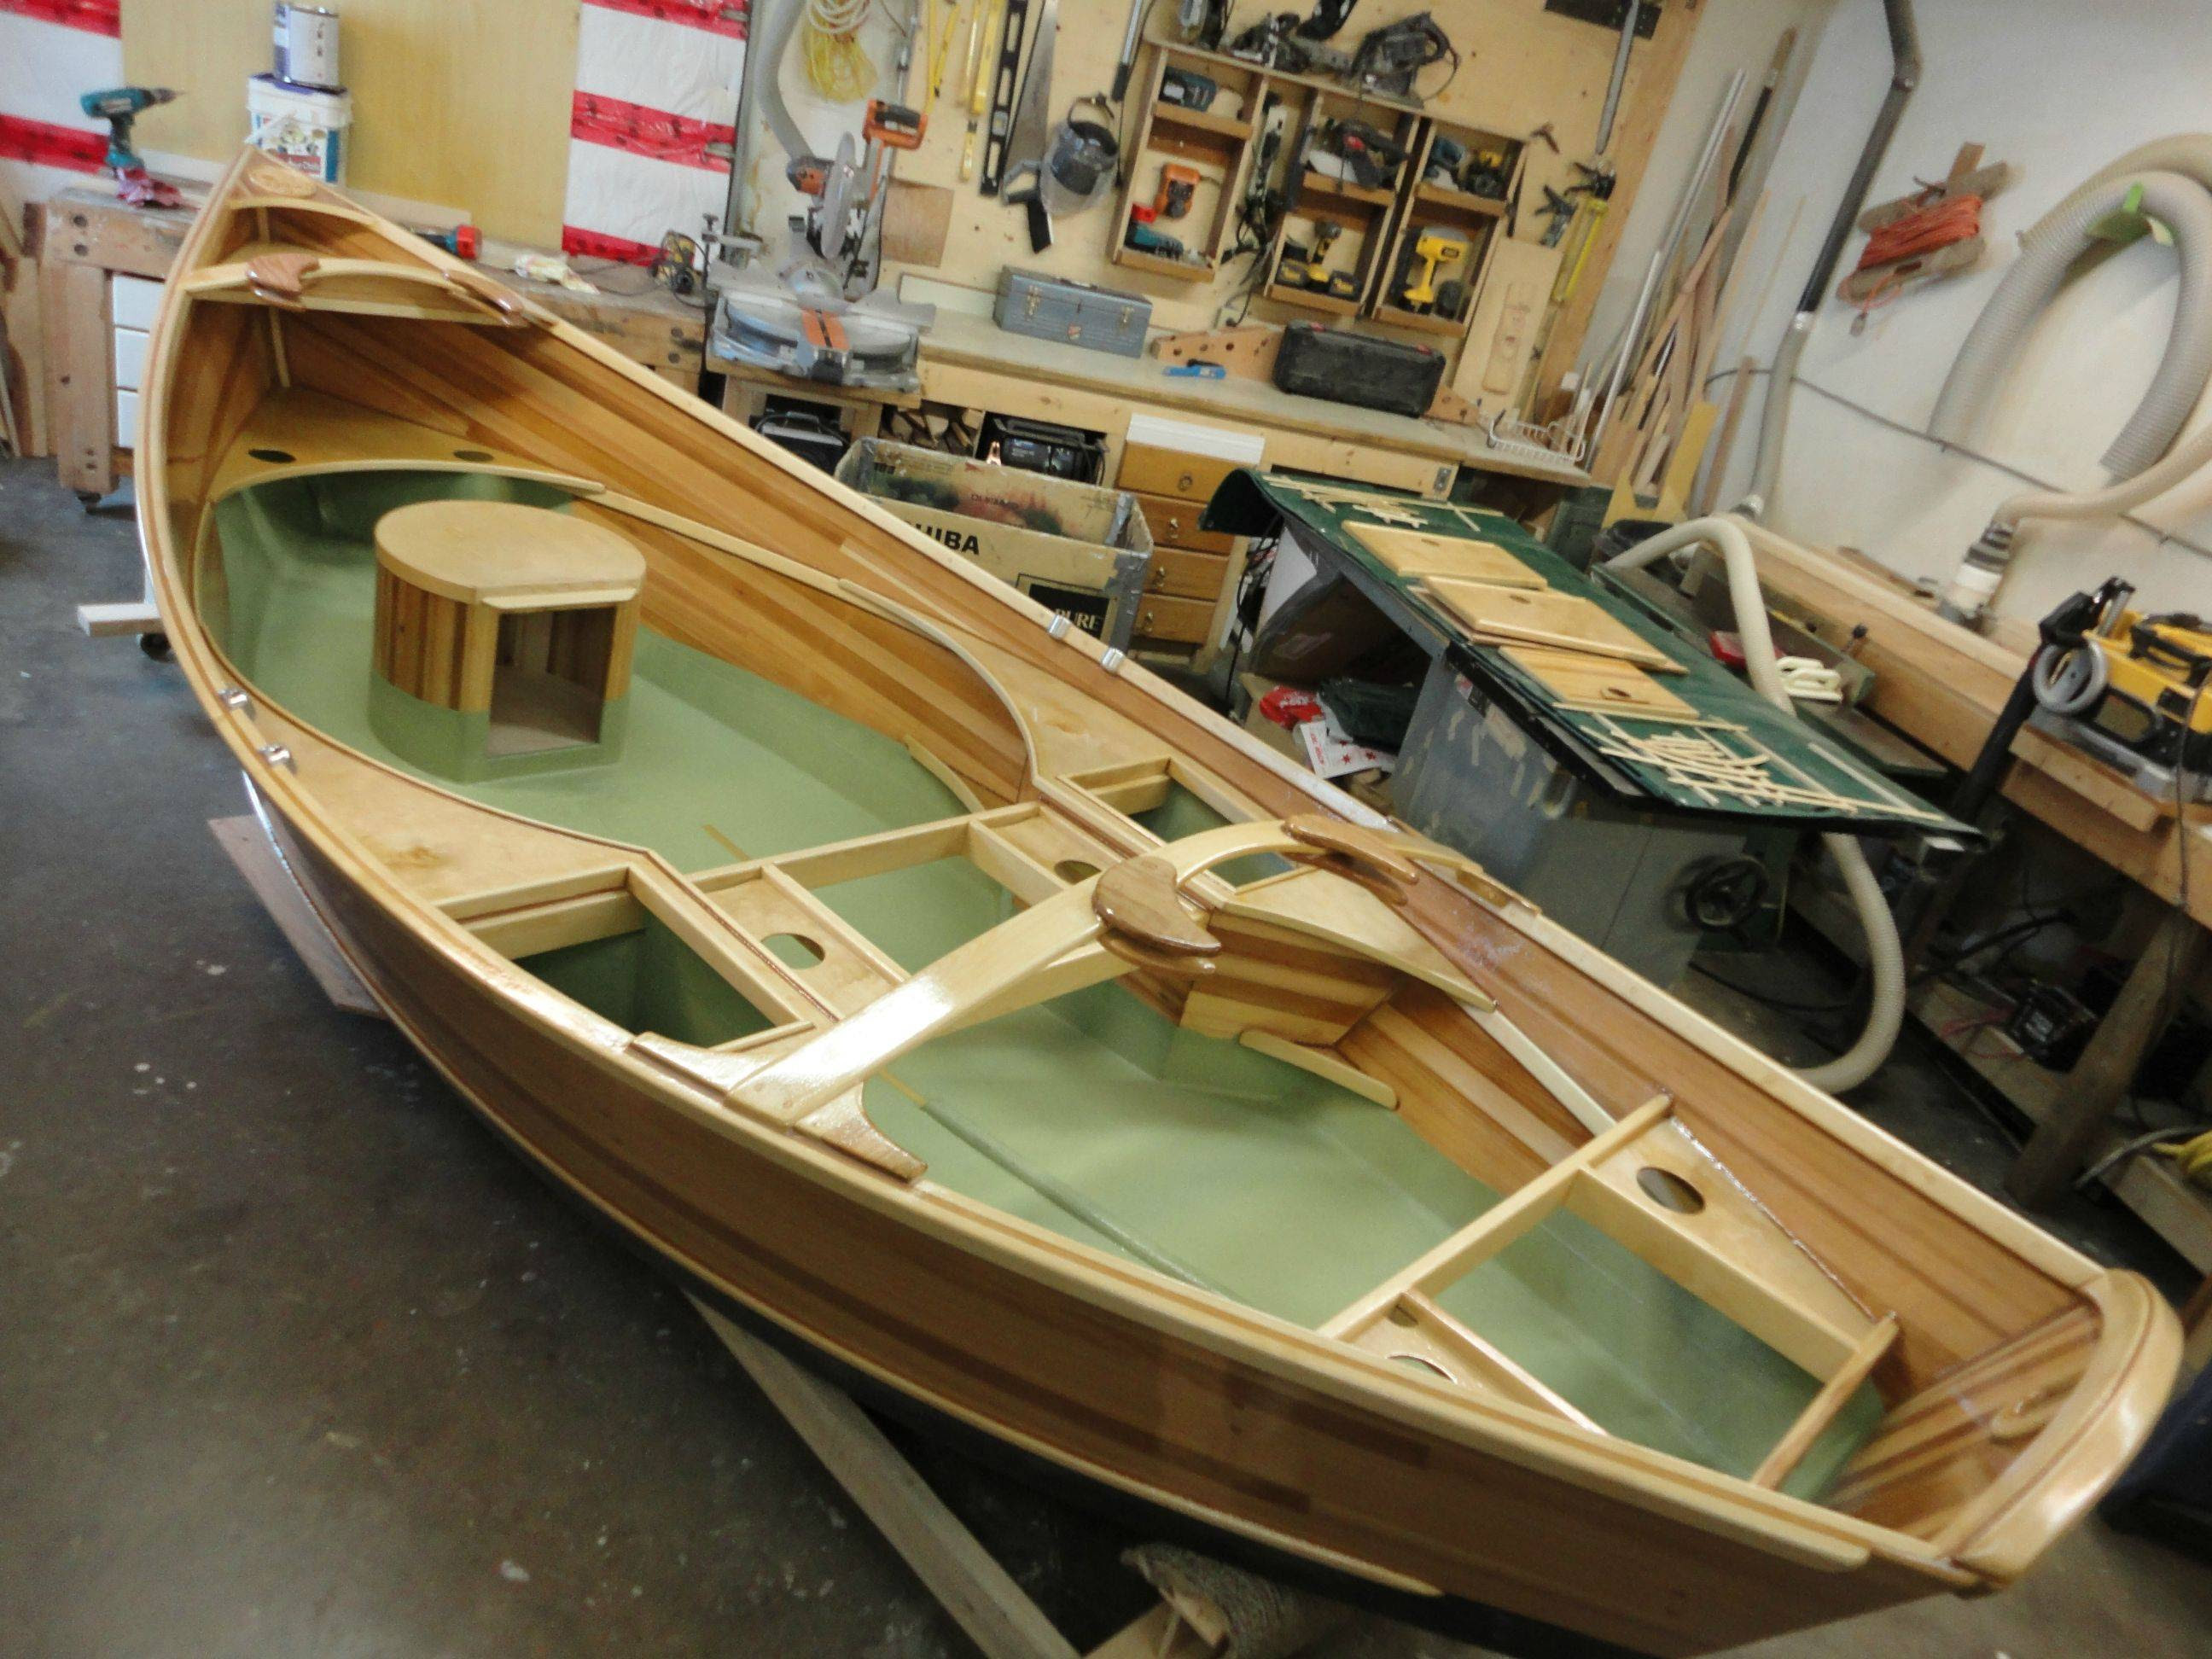 Strip built rowboat plans